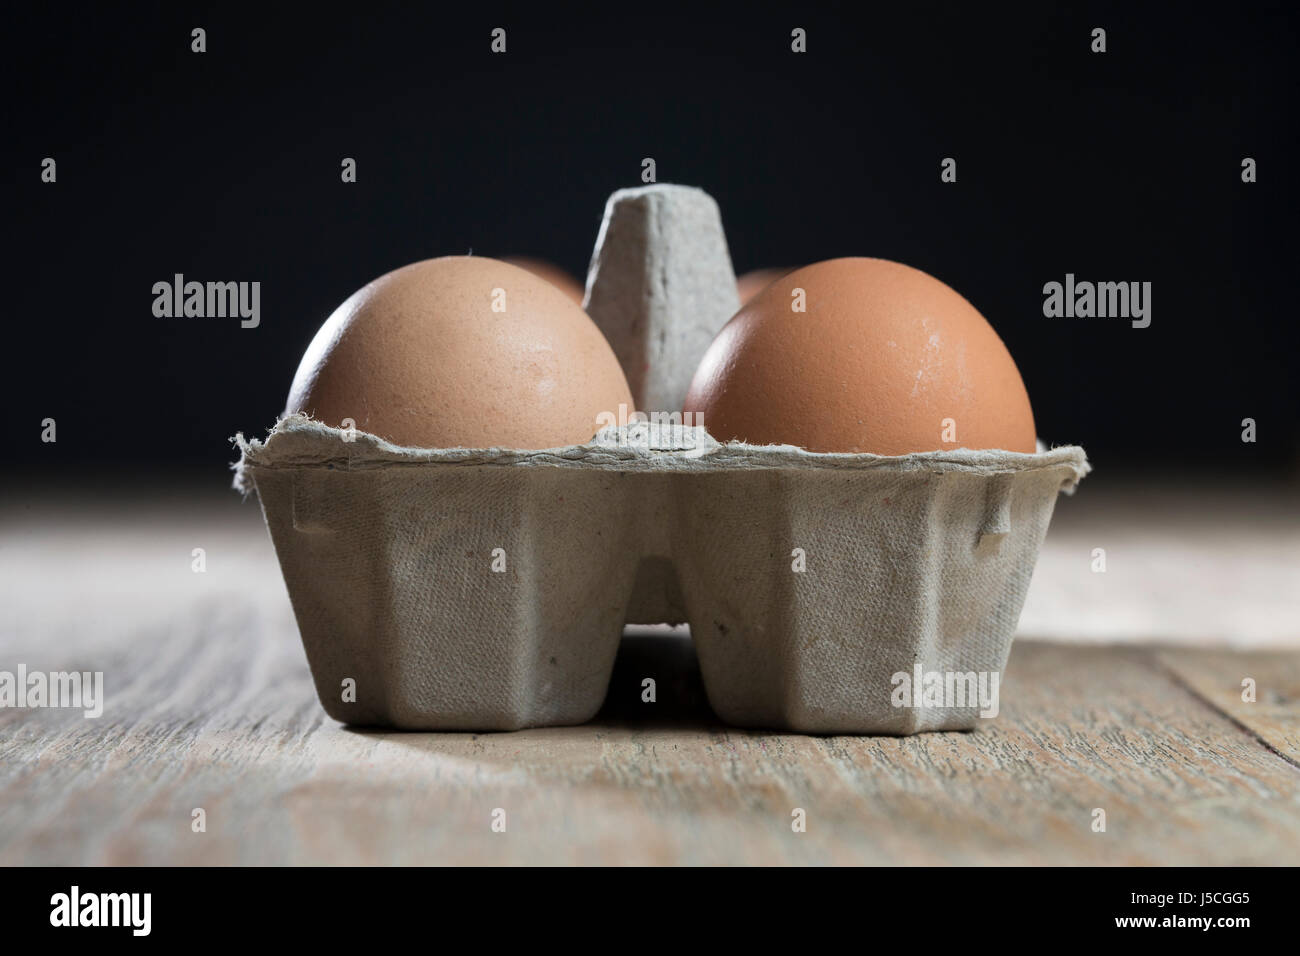 Carton of Farm fresh eggs sitting on rustic table. Stock Photo